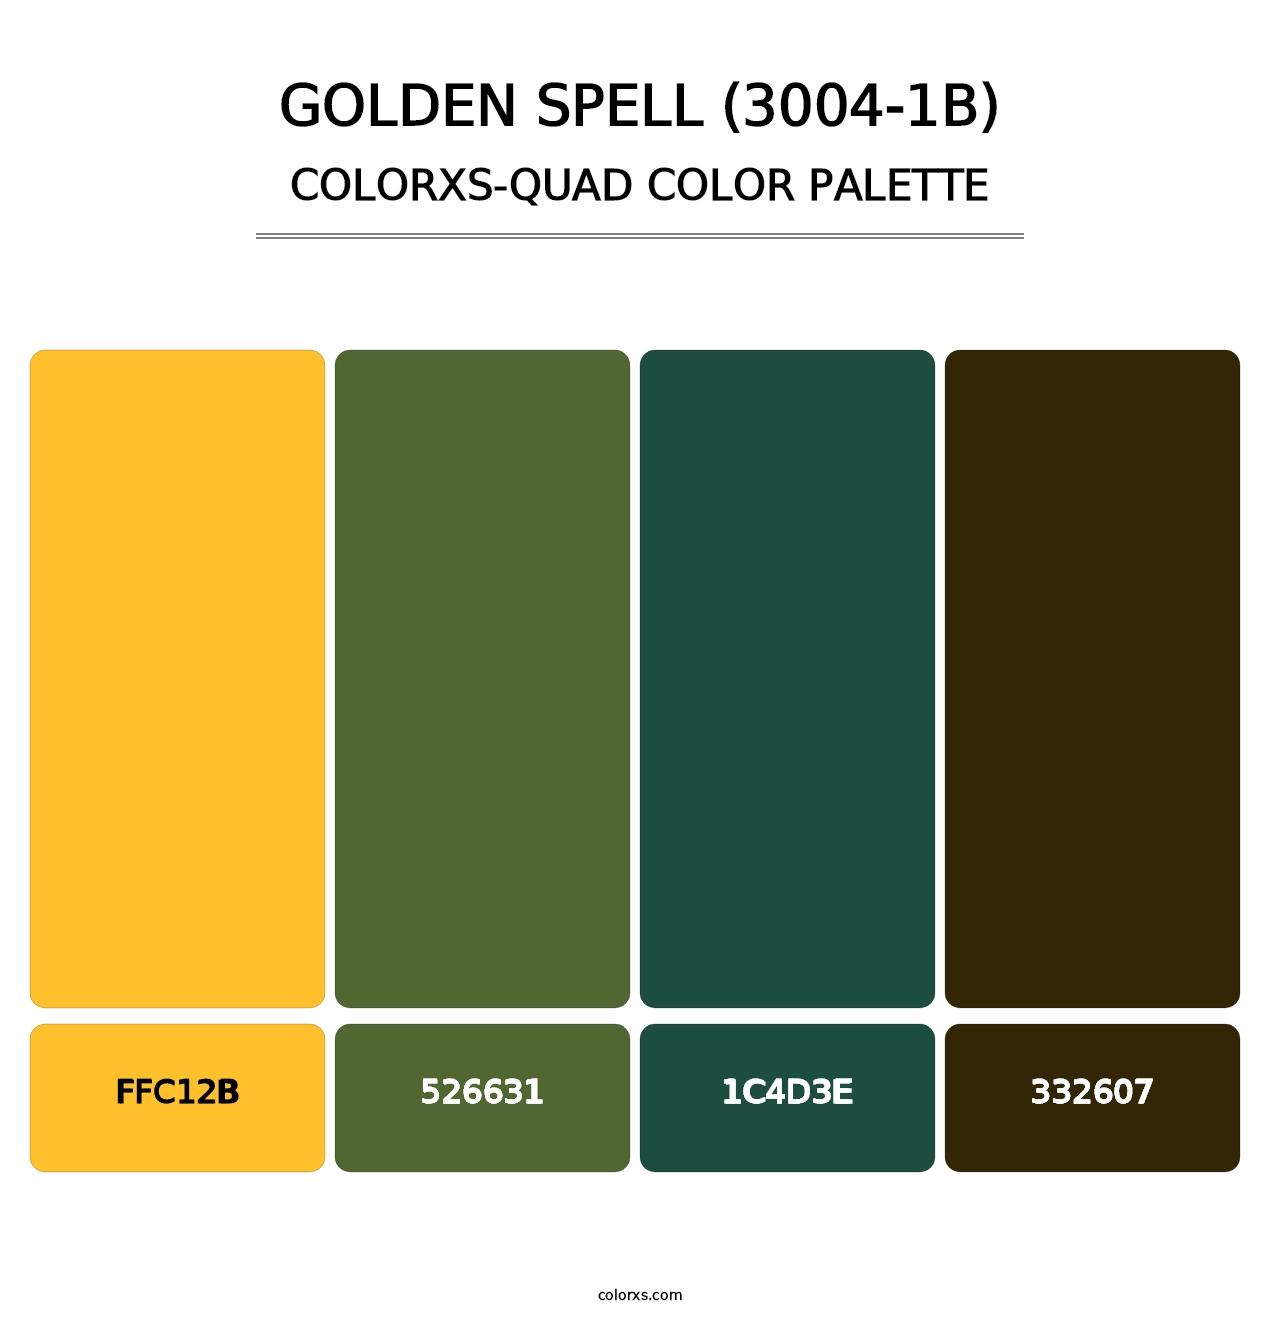 Golden Spell (3004-1B) - Colorxs Quad Palette